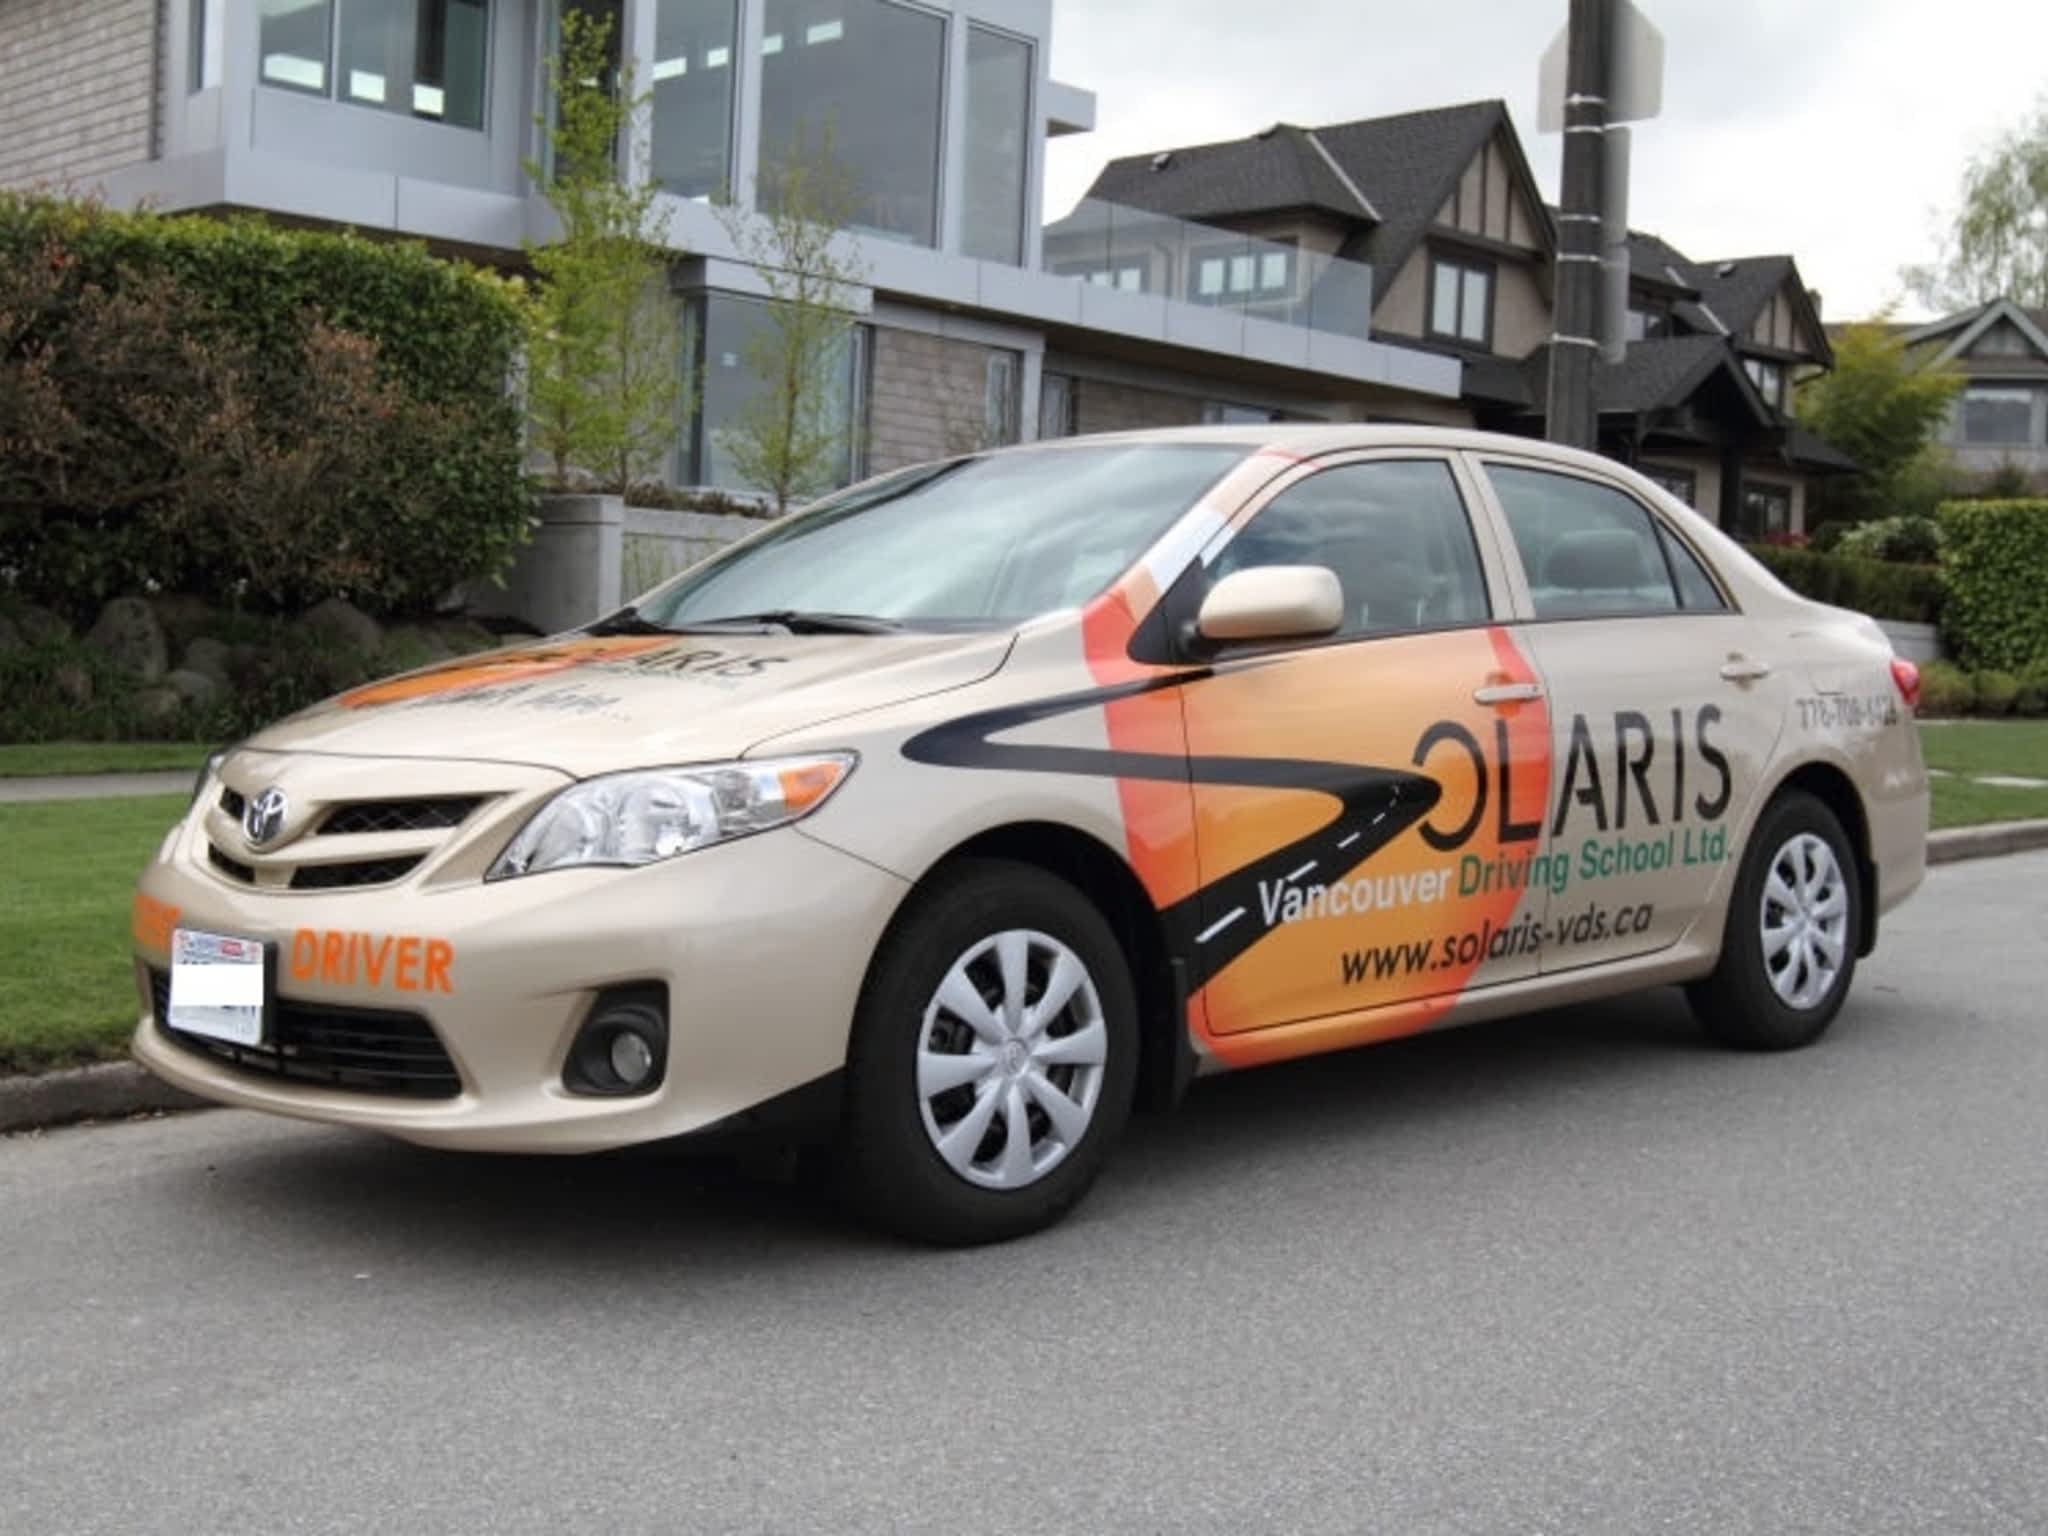 photo Solaris Driving School